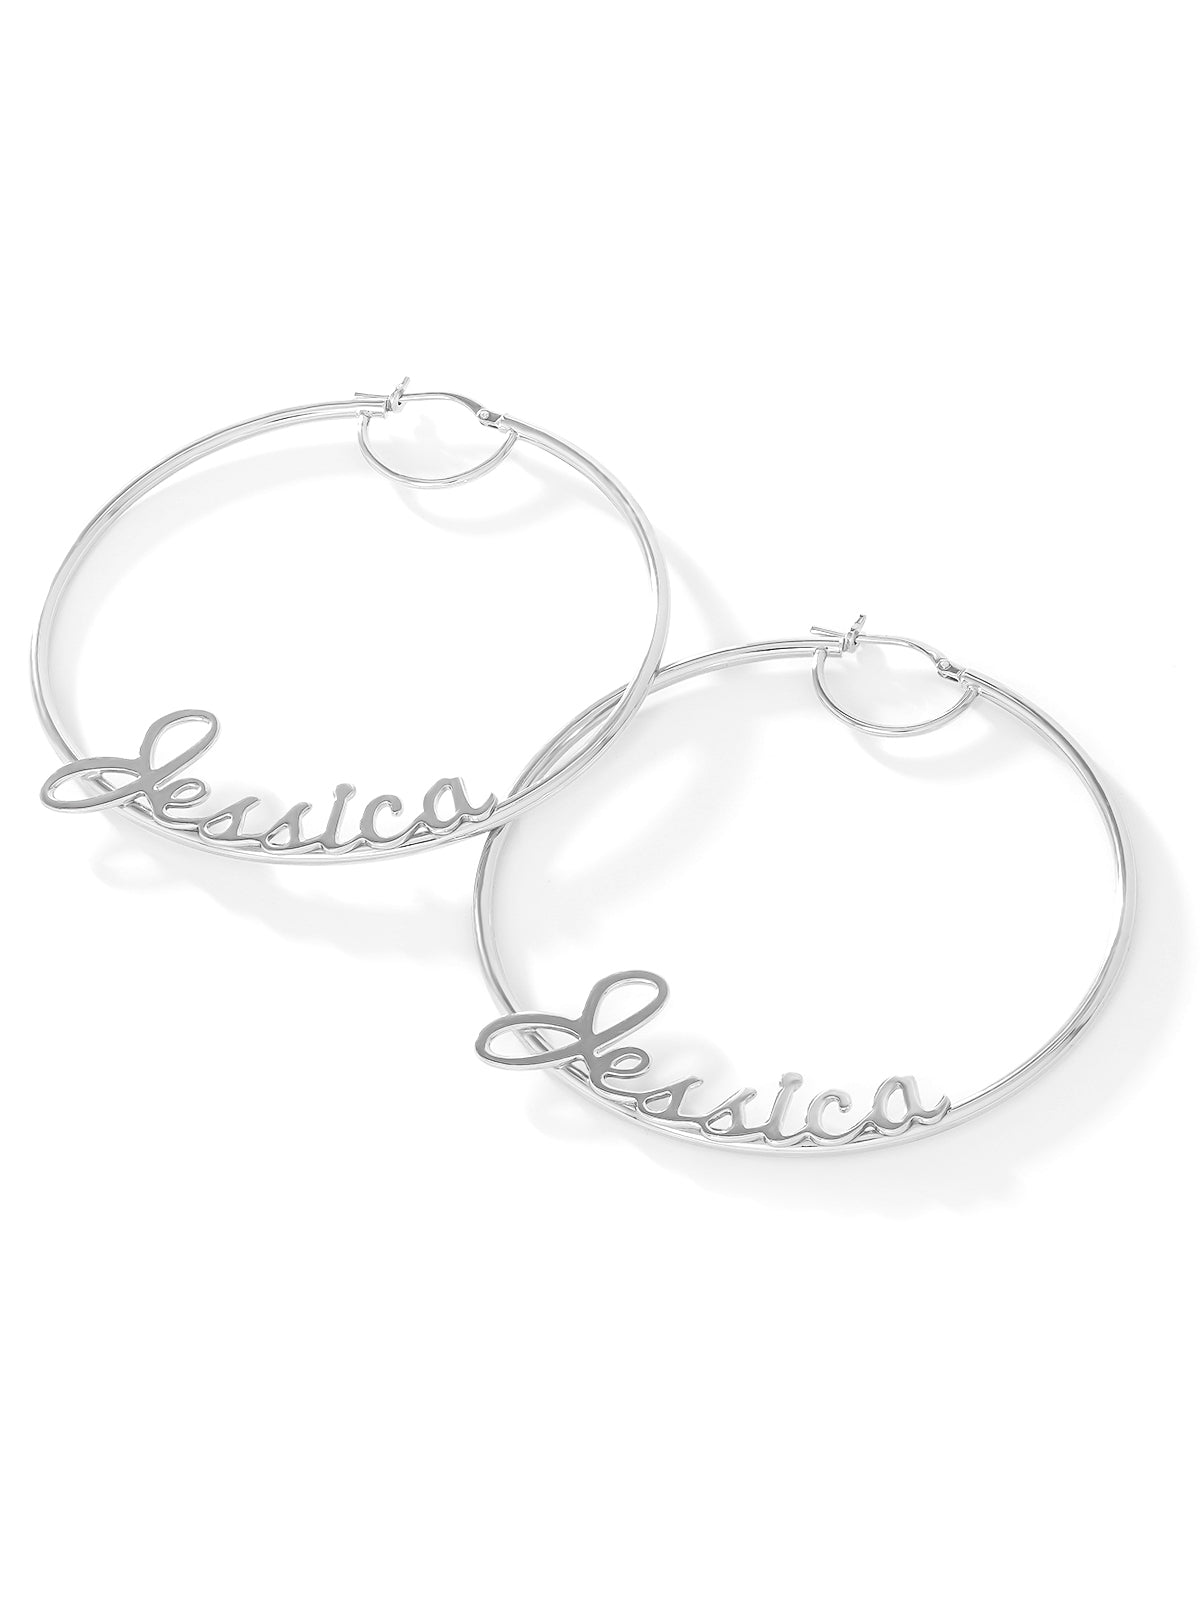 Image of Personalized Hoop Earrings in Sterling Silver